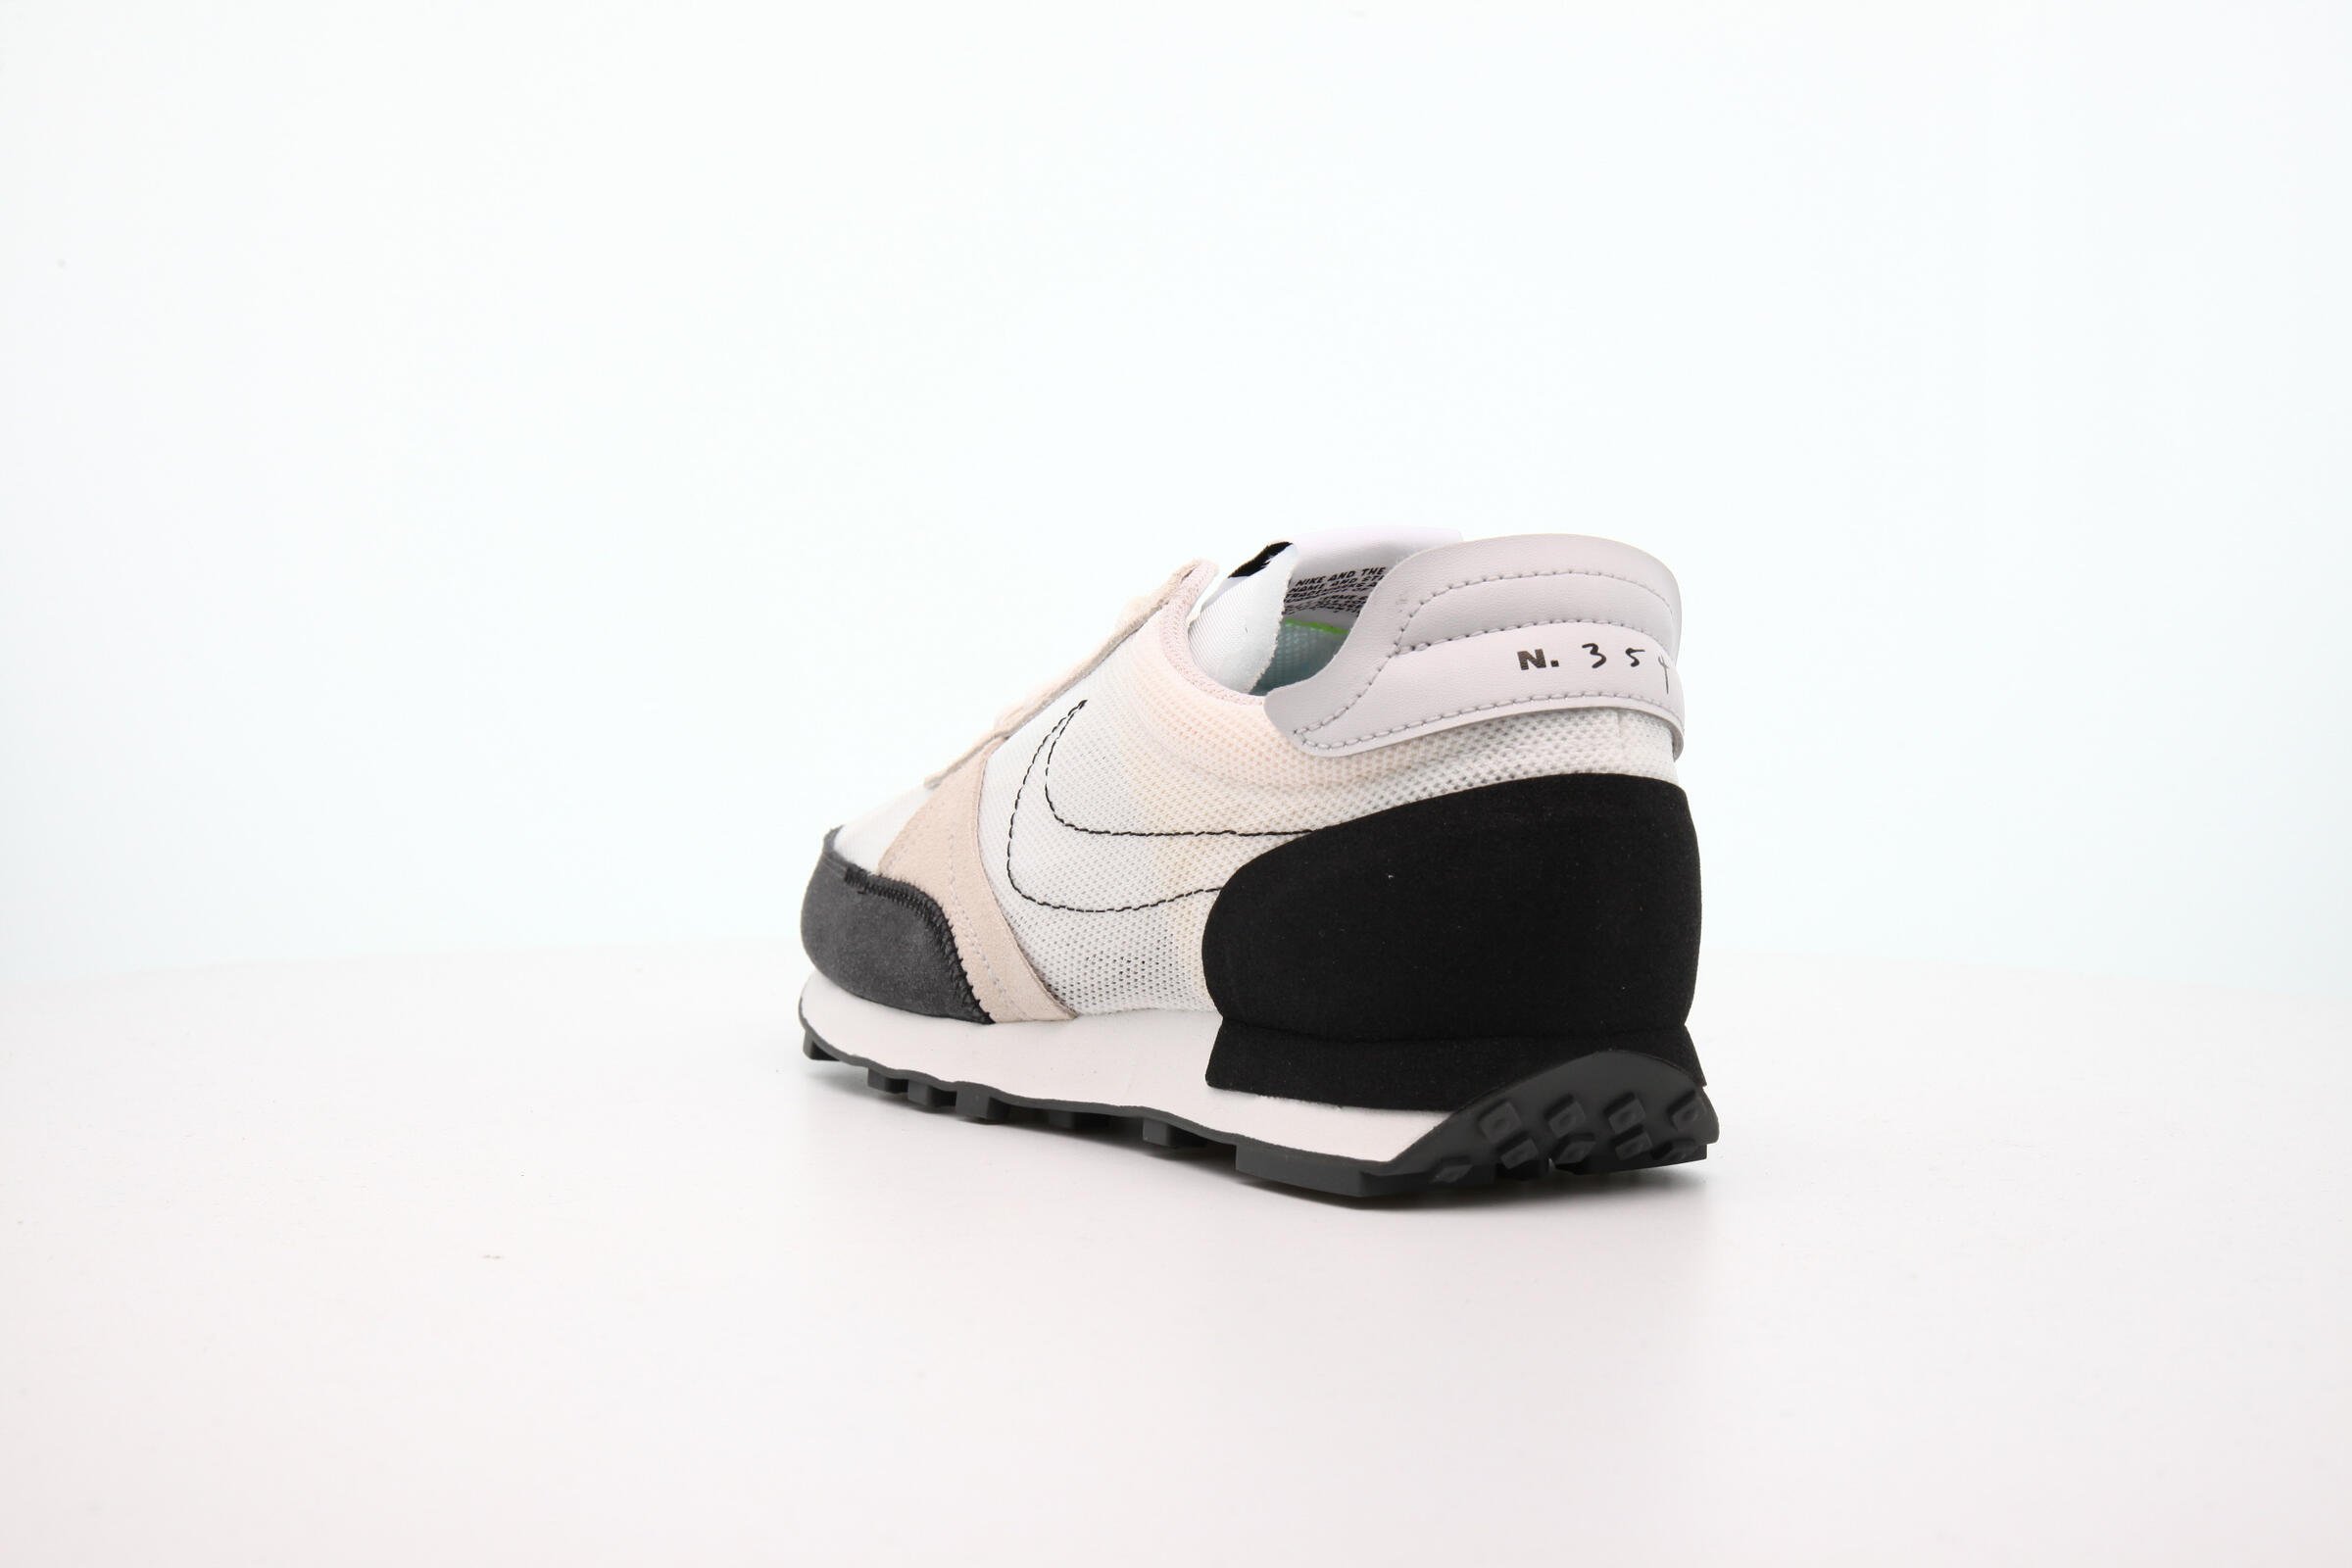 Nike DAYBREAK-TYPE "SUMMIT WHITE"